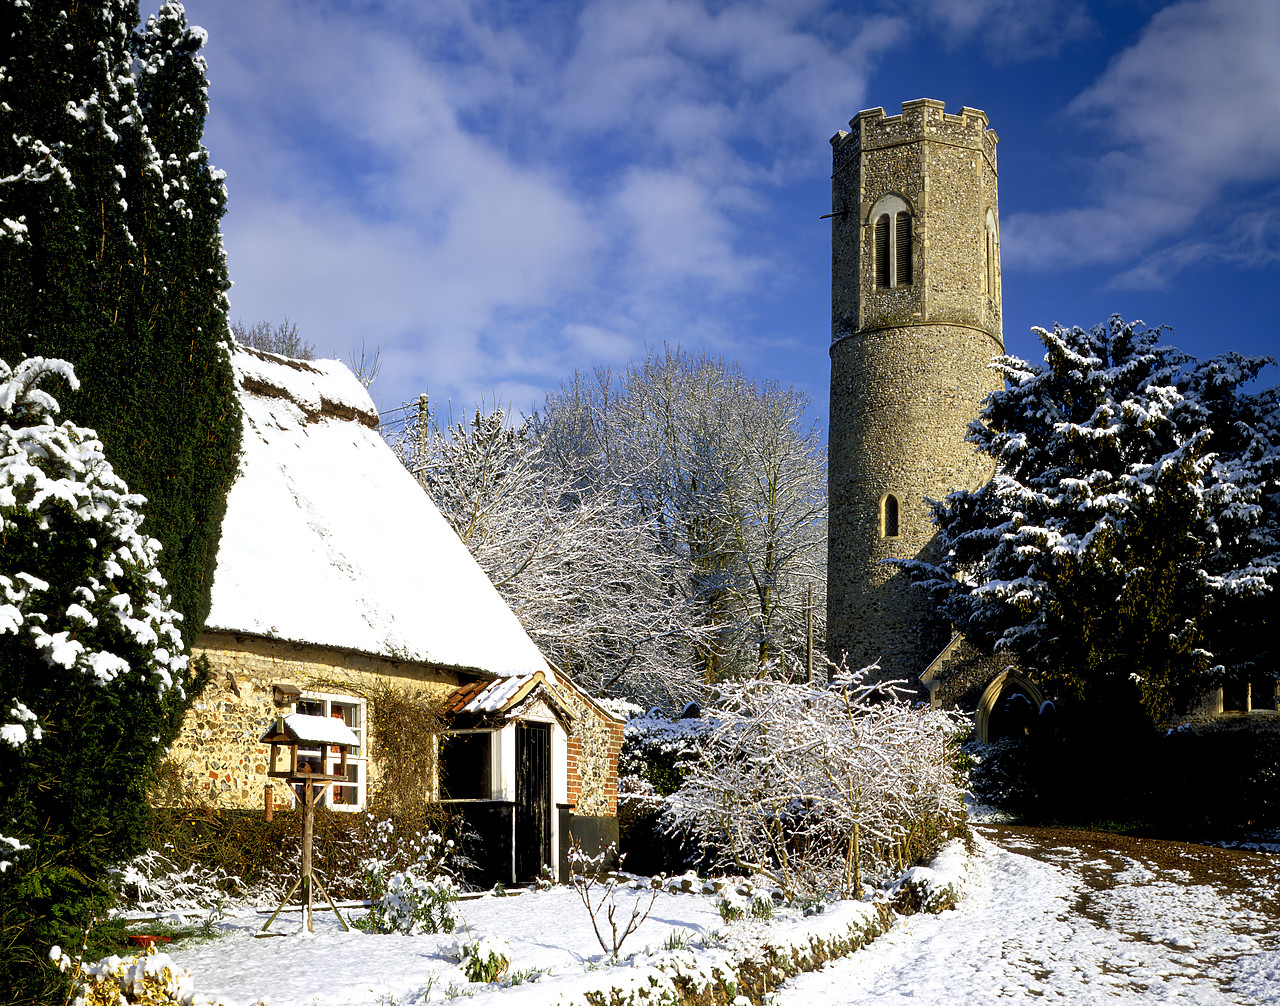 #040059-3 - Cottage & Church in Winter, Intwood, Norfolk, England